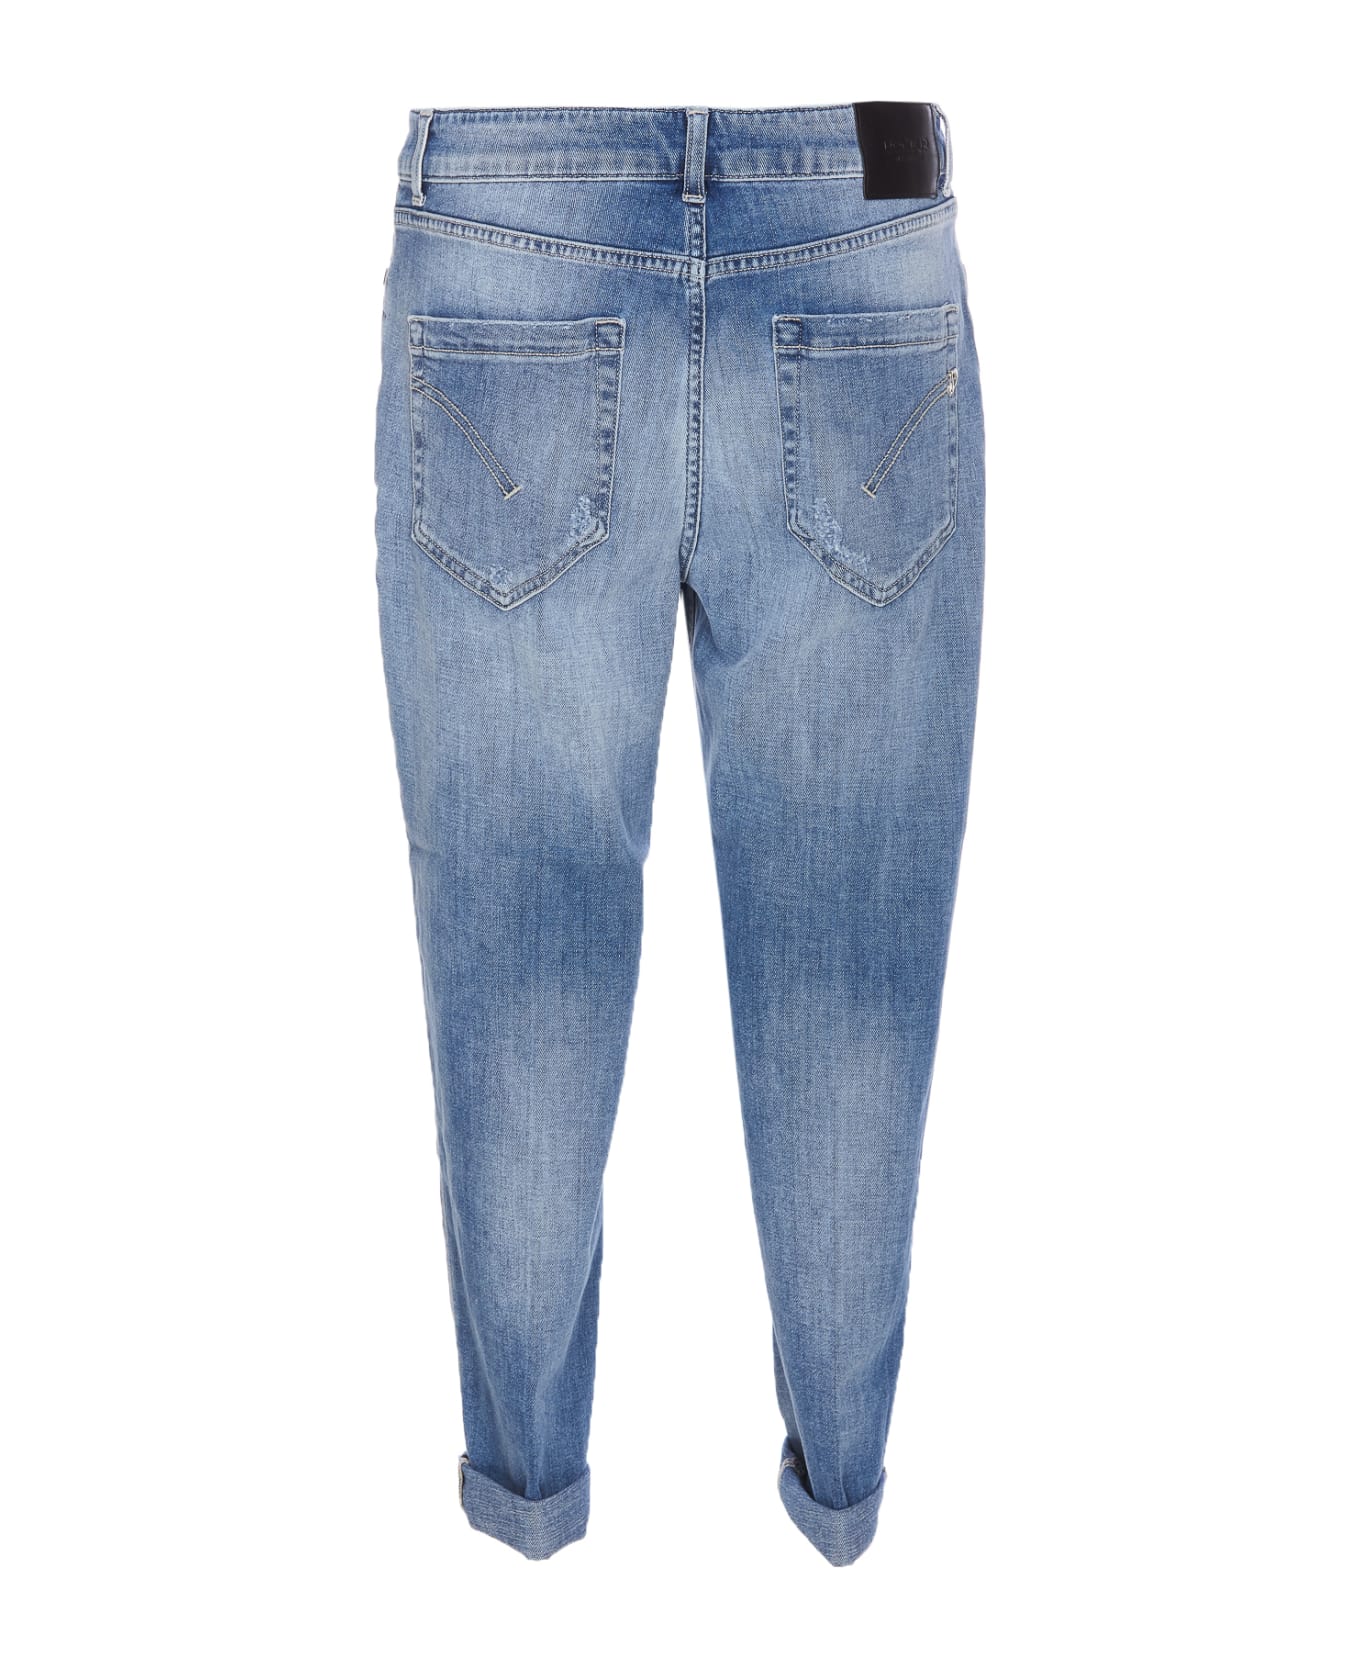 Dondup Koons Gioiello Denim Jeans - Blue